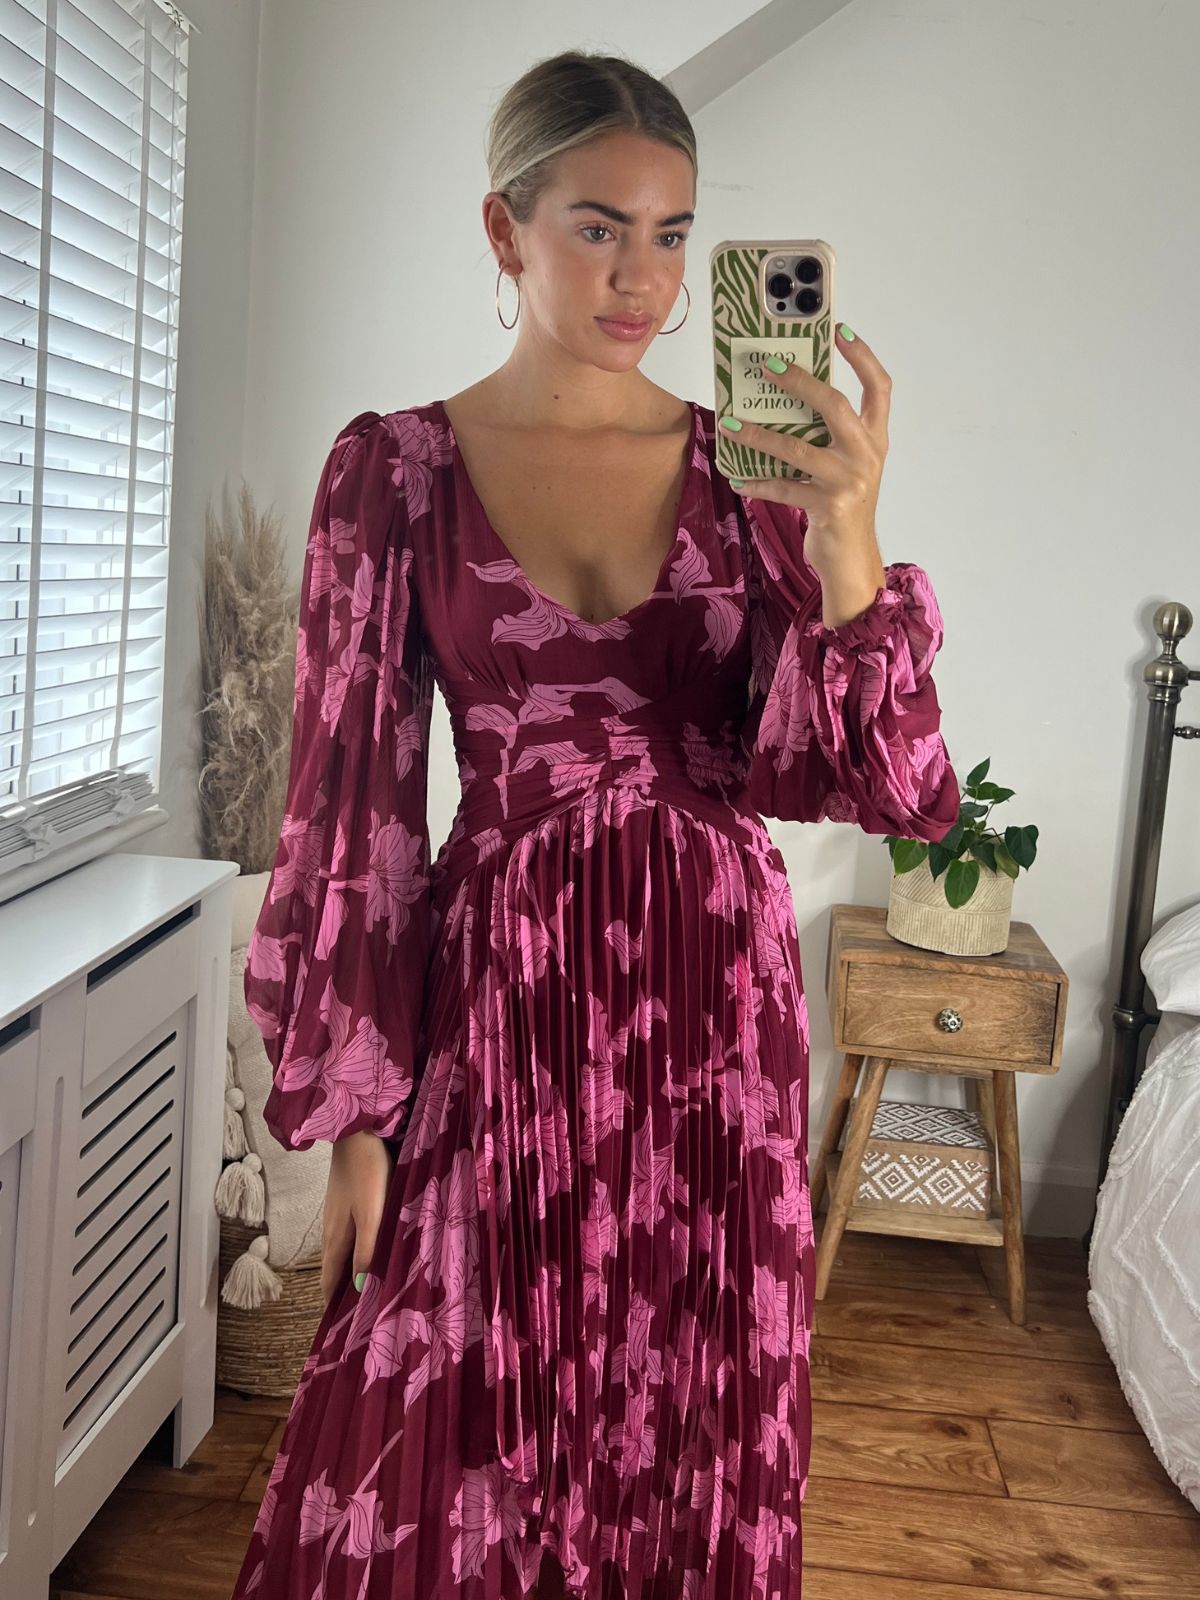 Long Sleeve Pink Floral Maxi Dress